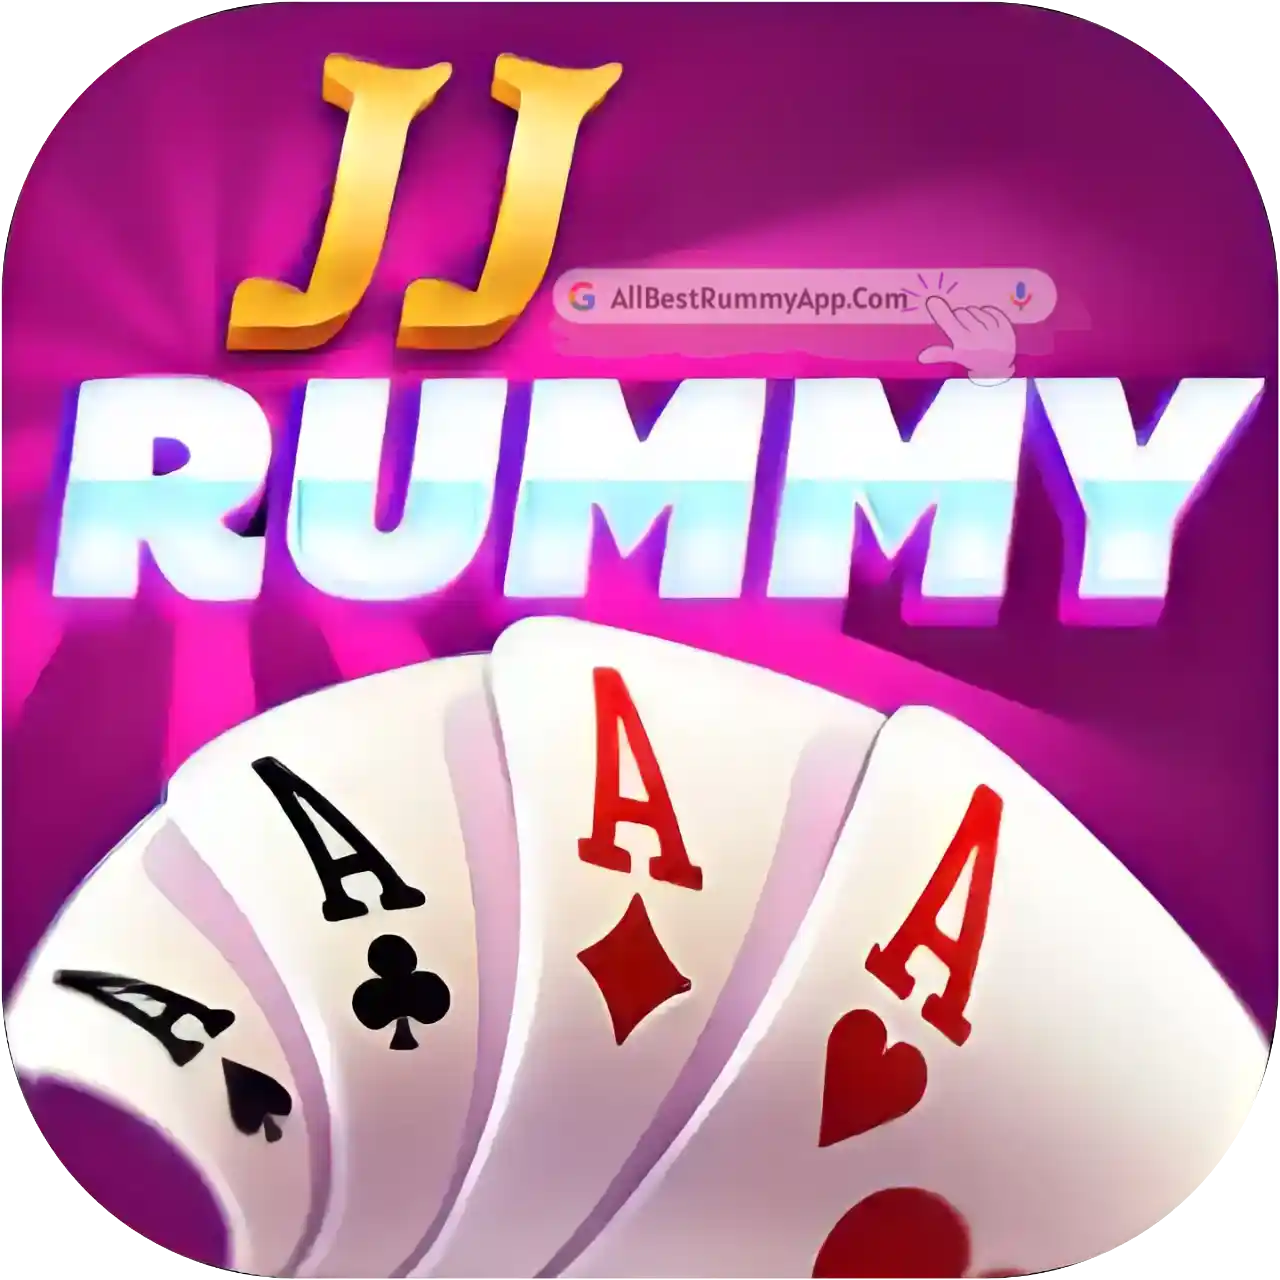 JJ Rummy Logo - All Best Rummy App